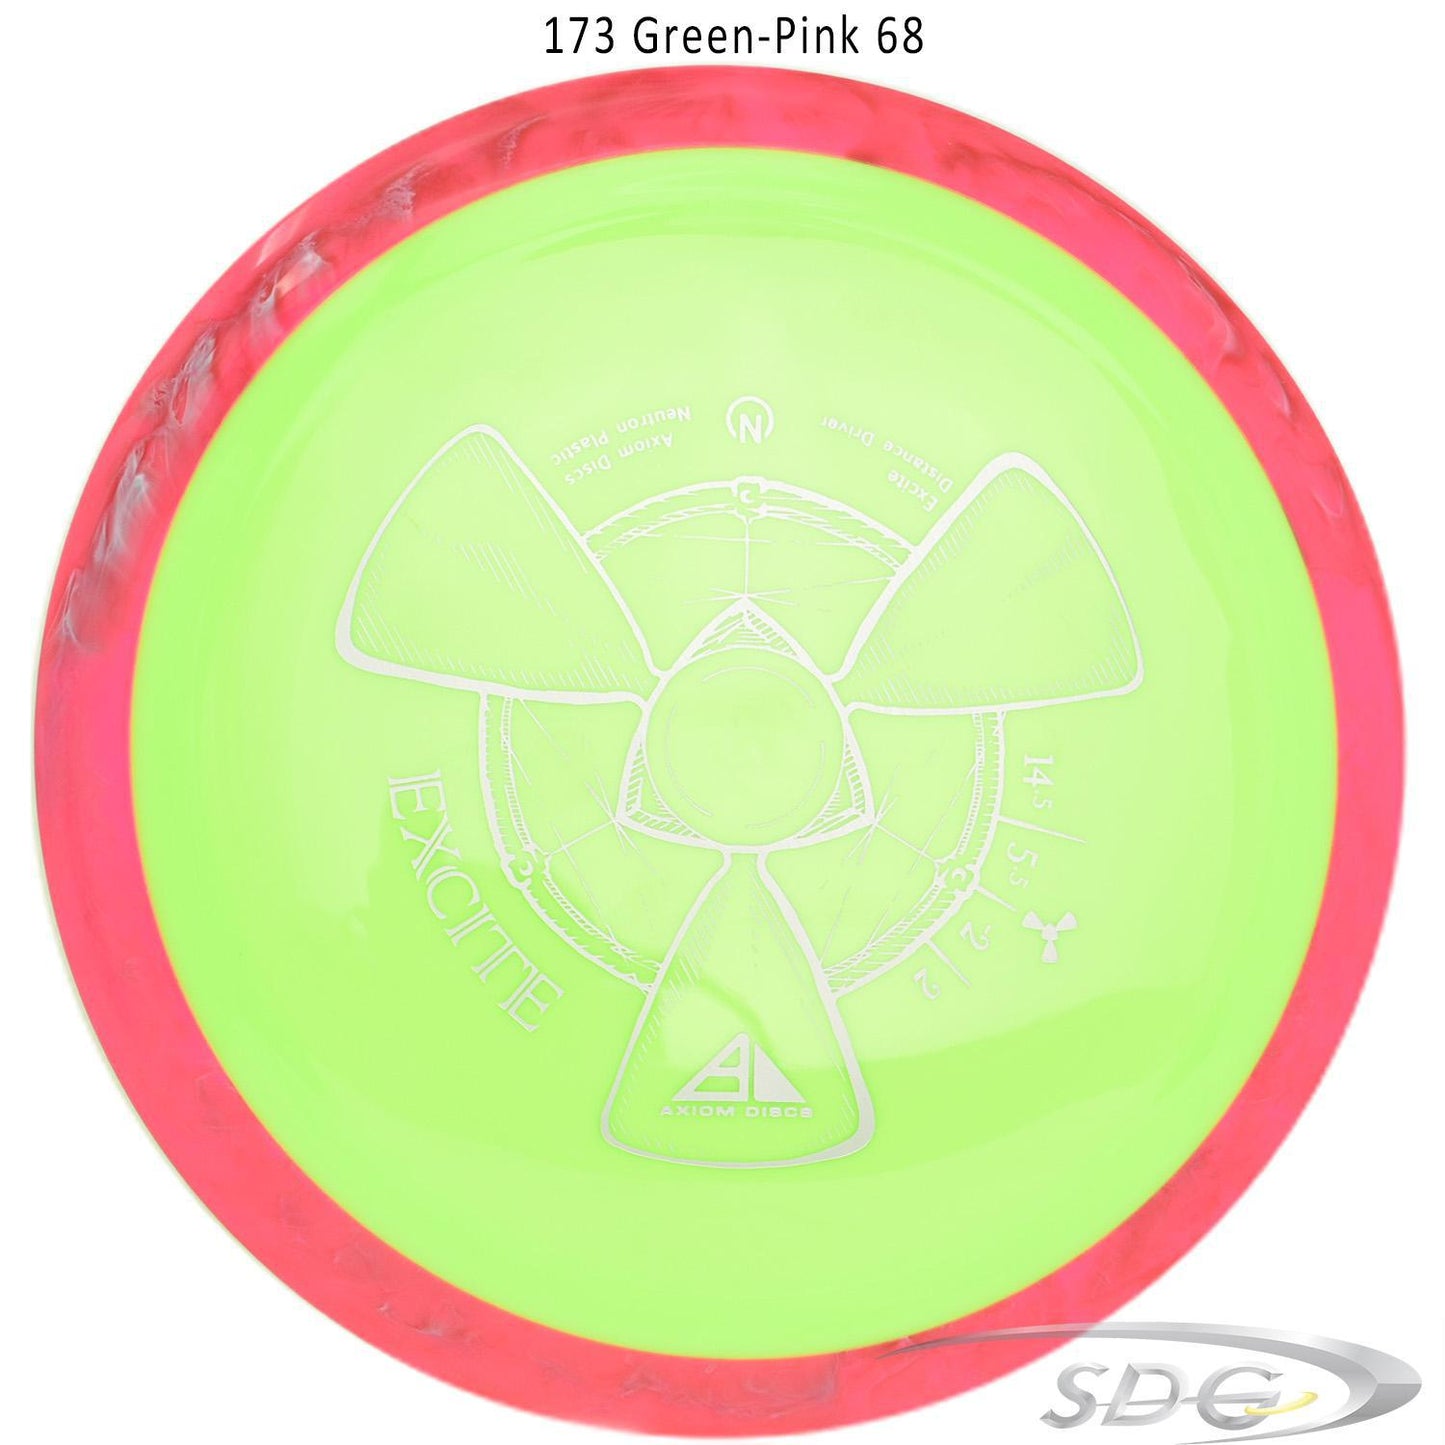 axiom-neutron-excite-disc-golf-distance-driver 173 Green-Pink 68 